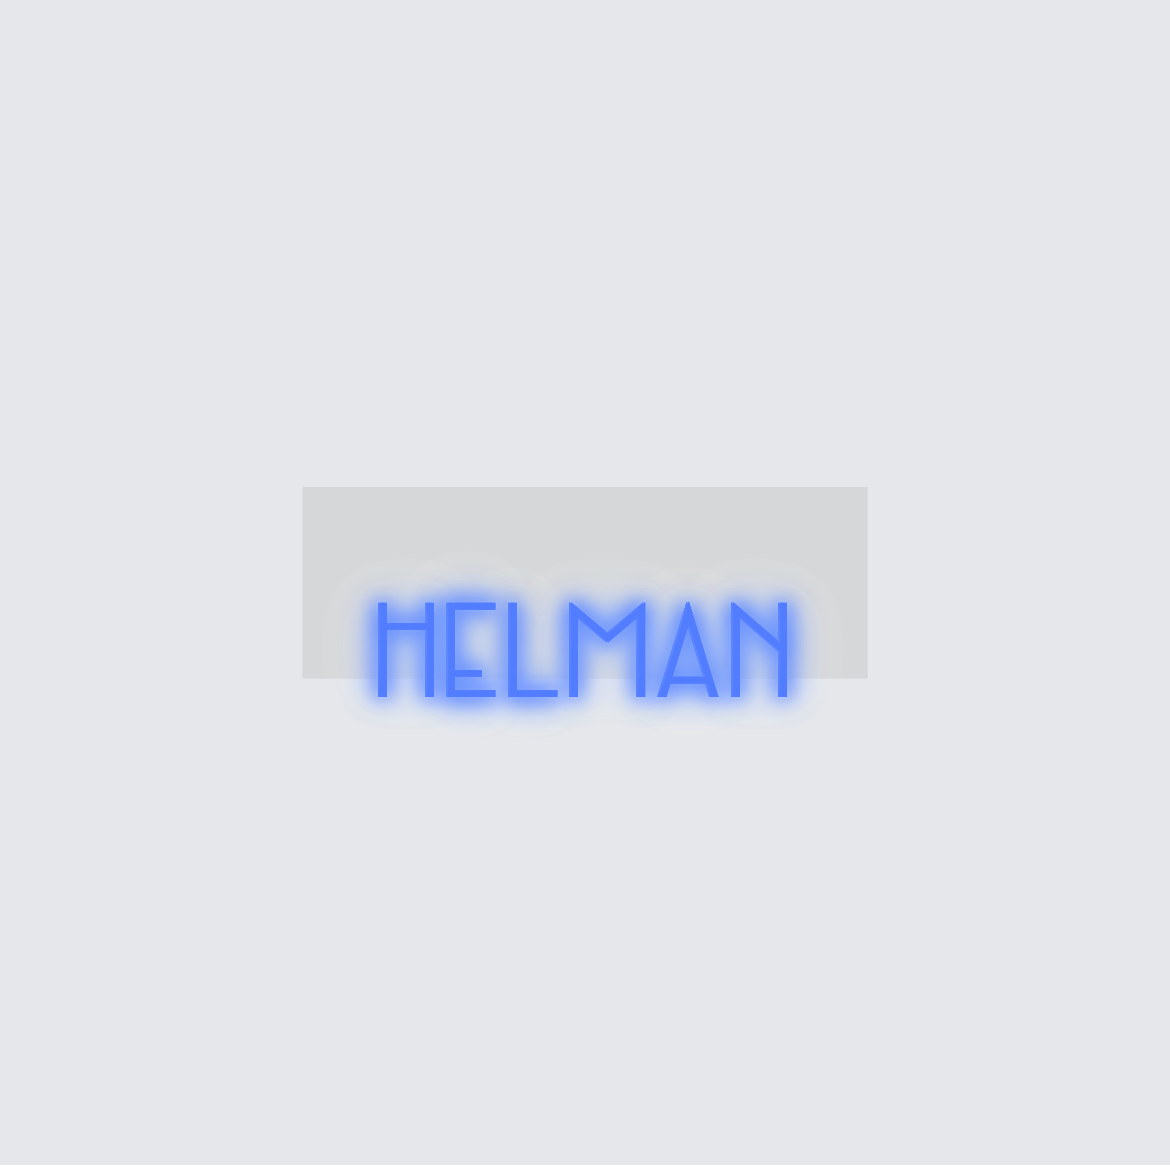 Custom neon sign - Helman